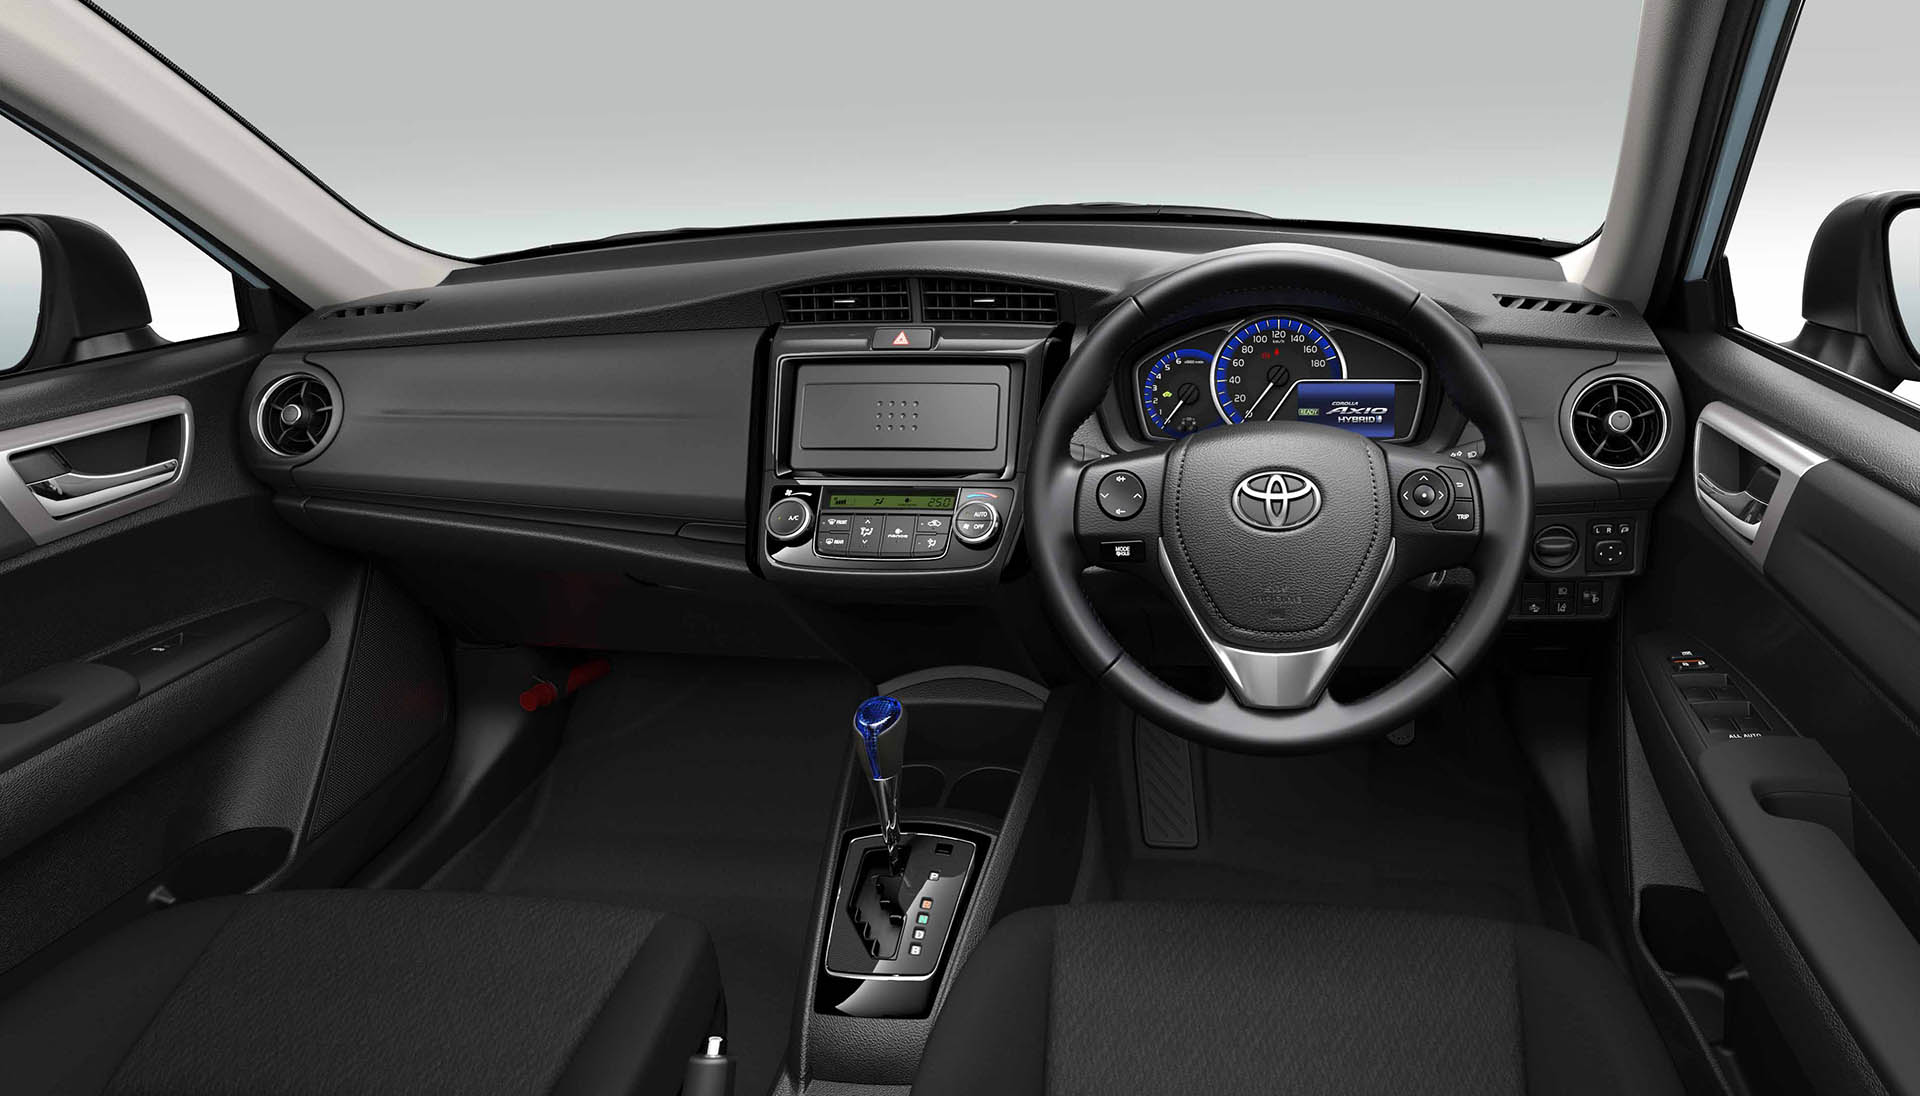 Corolla Axio Hybrid G(Black interior; options shown)